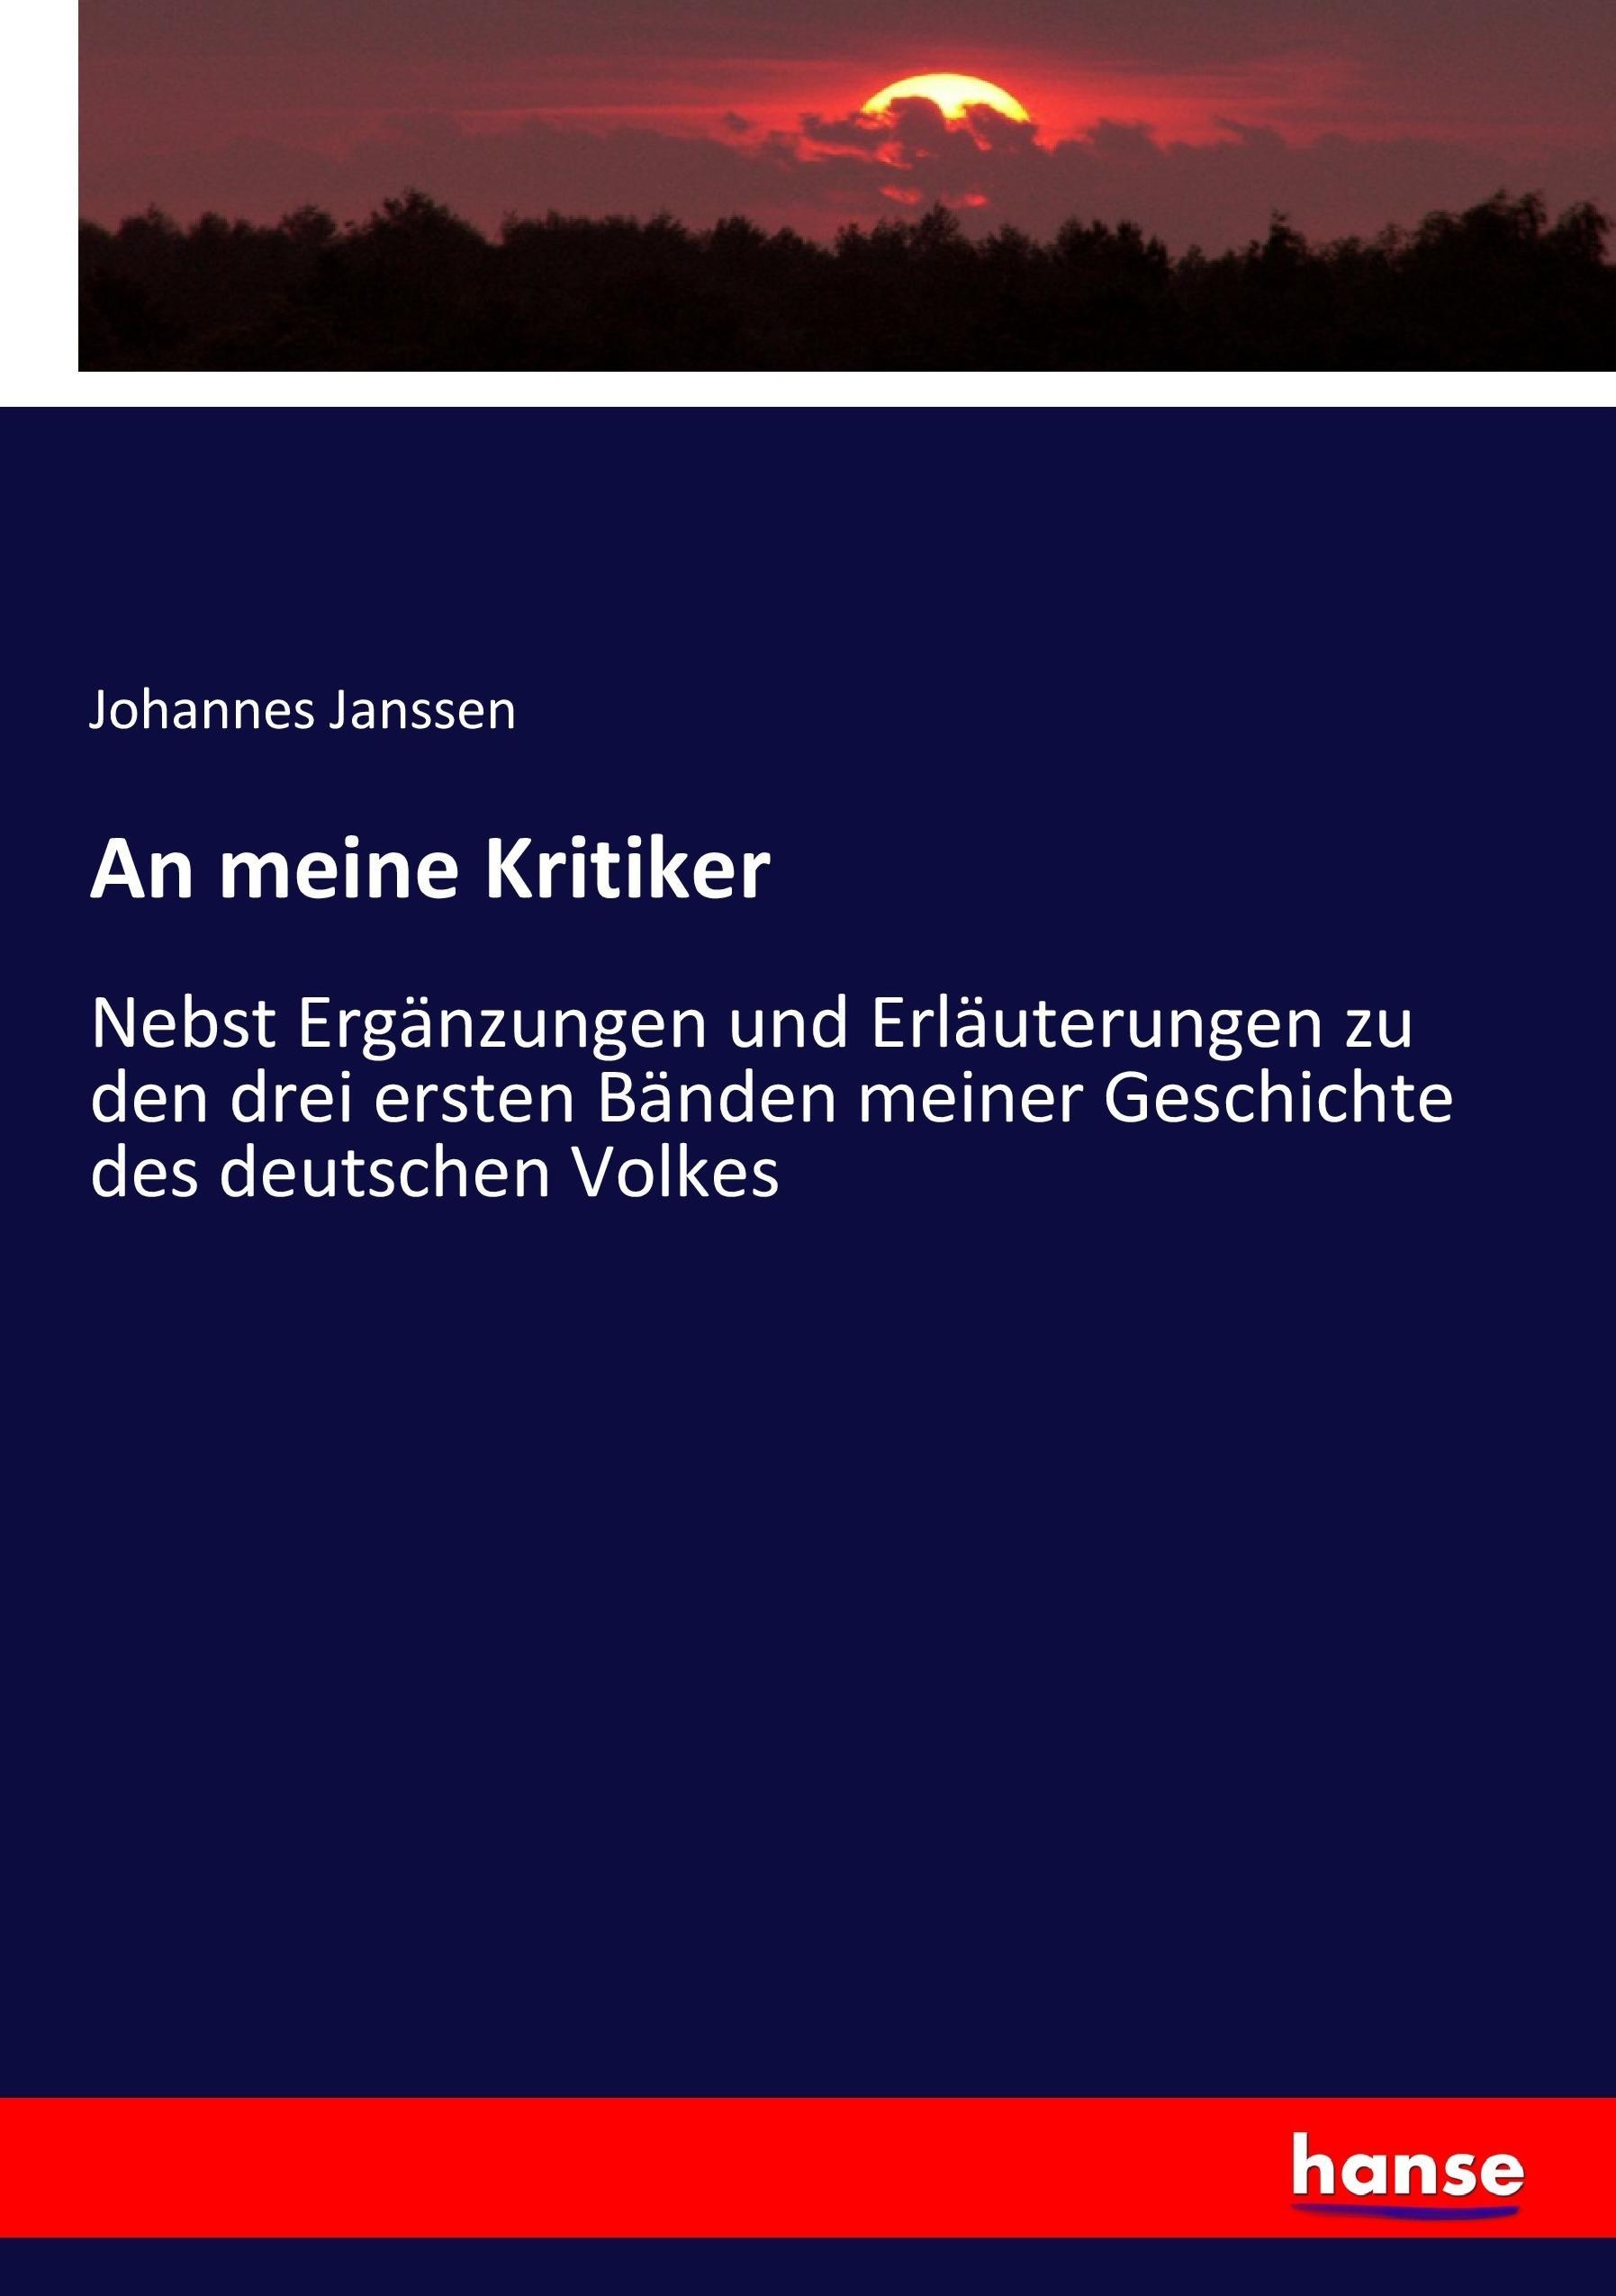 An meine Kritiker - Janssen, Johannes